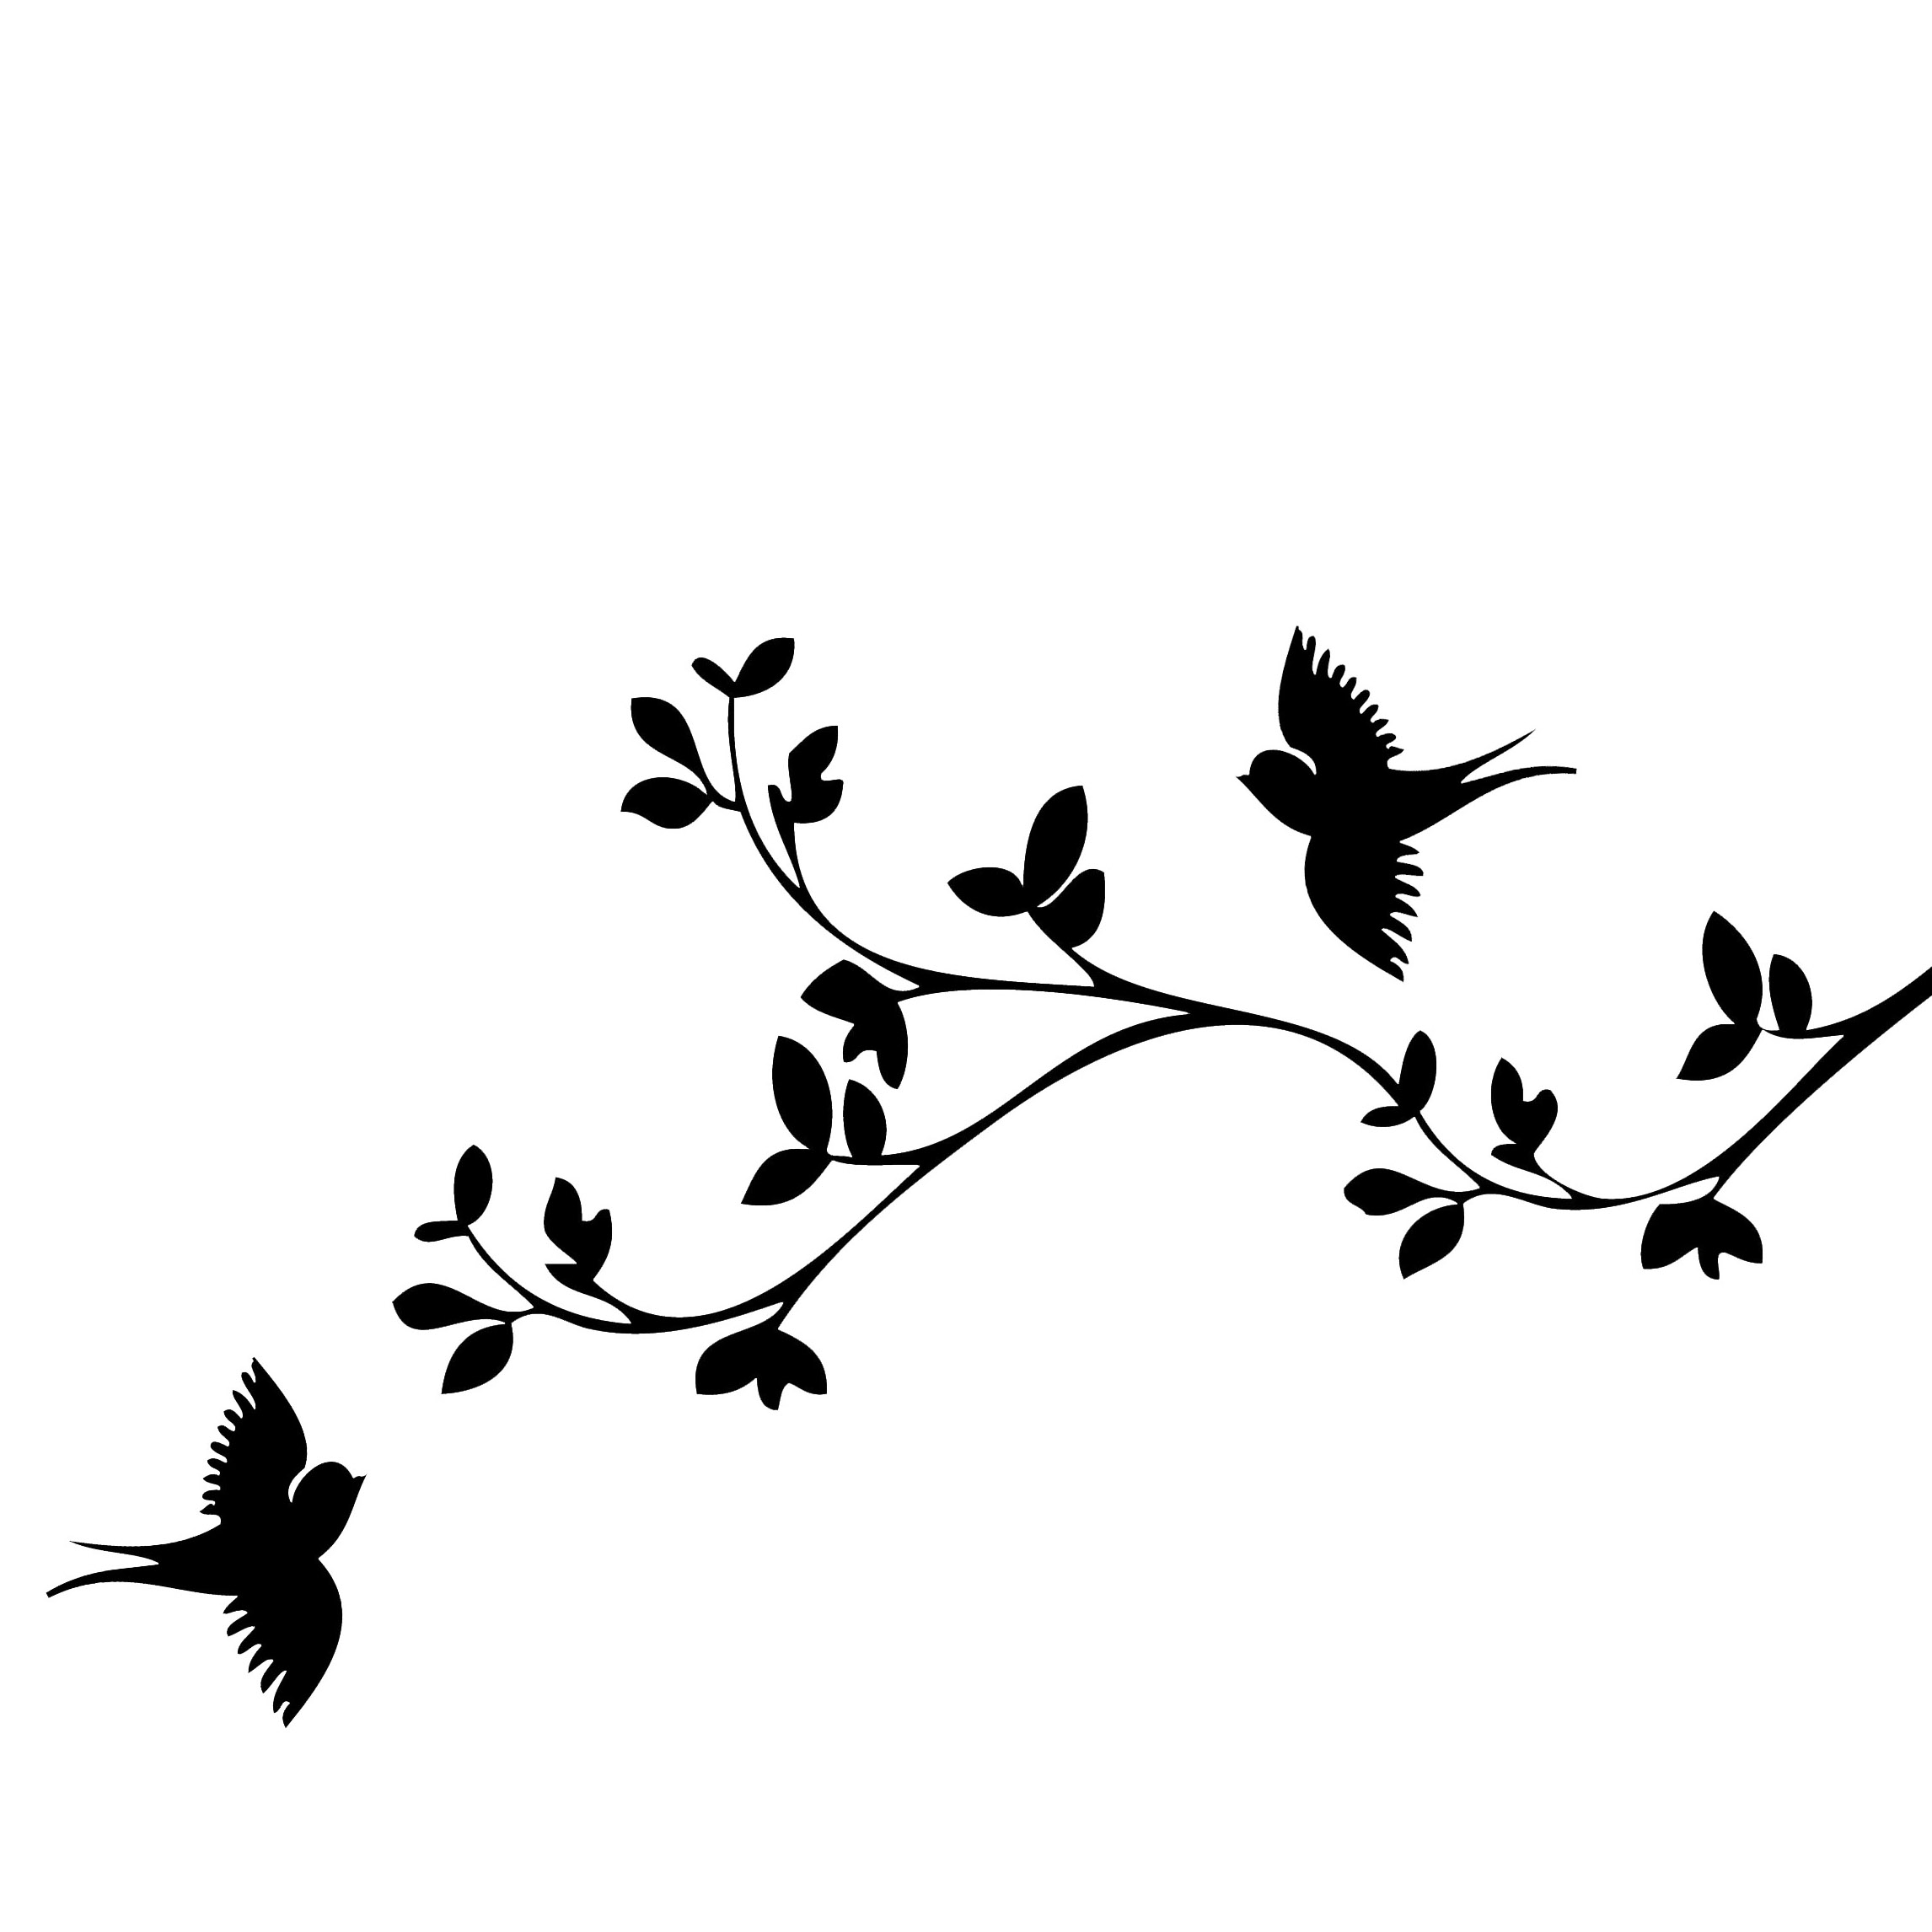 free-bird-branch-silhouette-download-free-bird-branch-silhouette-png